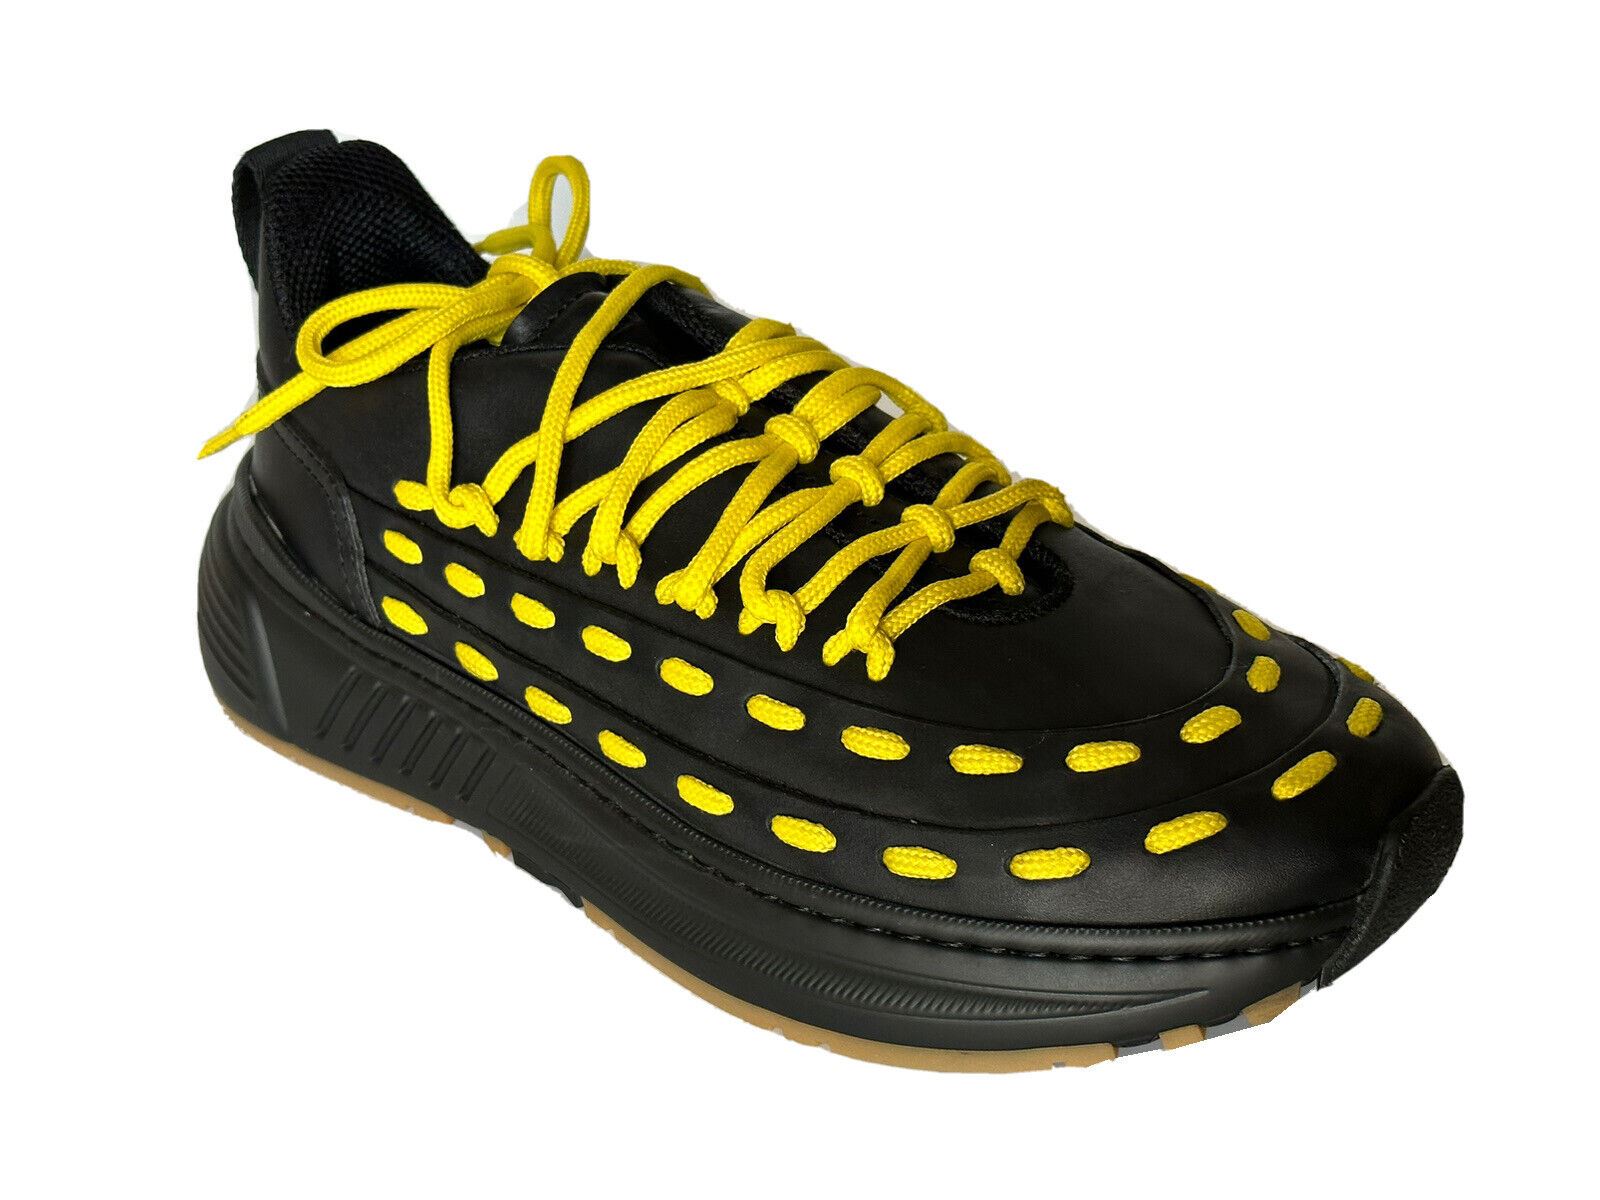 NIB $950 Bottega Veneta Mens Leather Black/Yellow Sneakers 9 US (42) 578305 1013